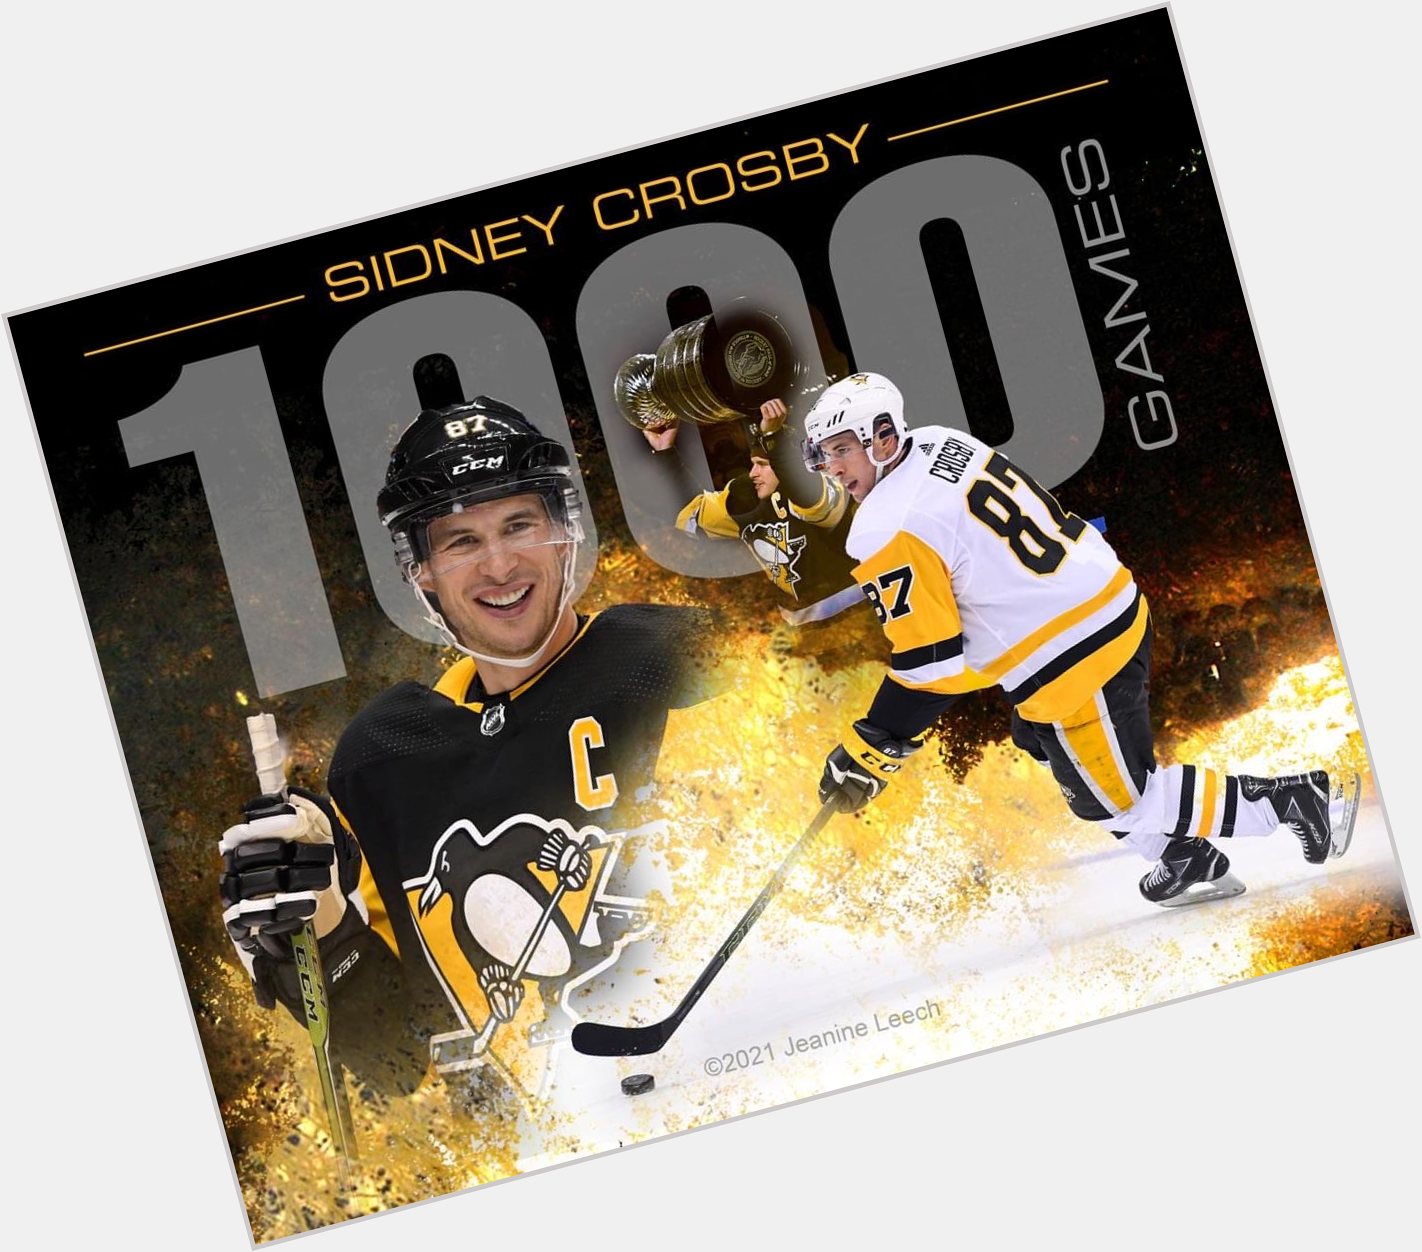 Happy birthday to Sidney Crosby.  